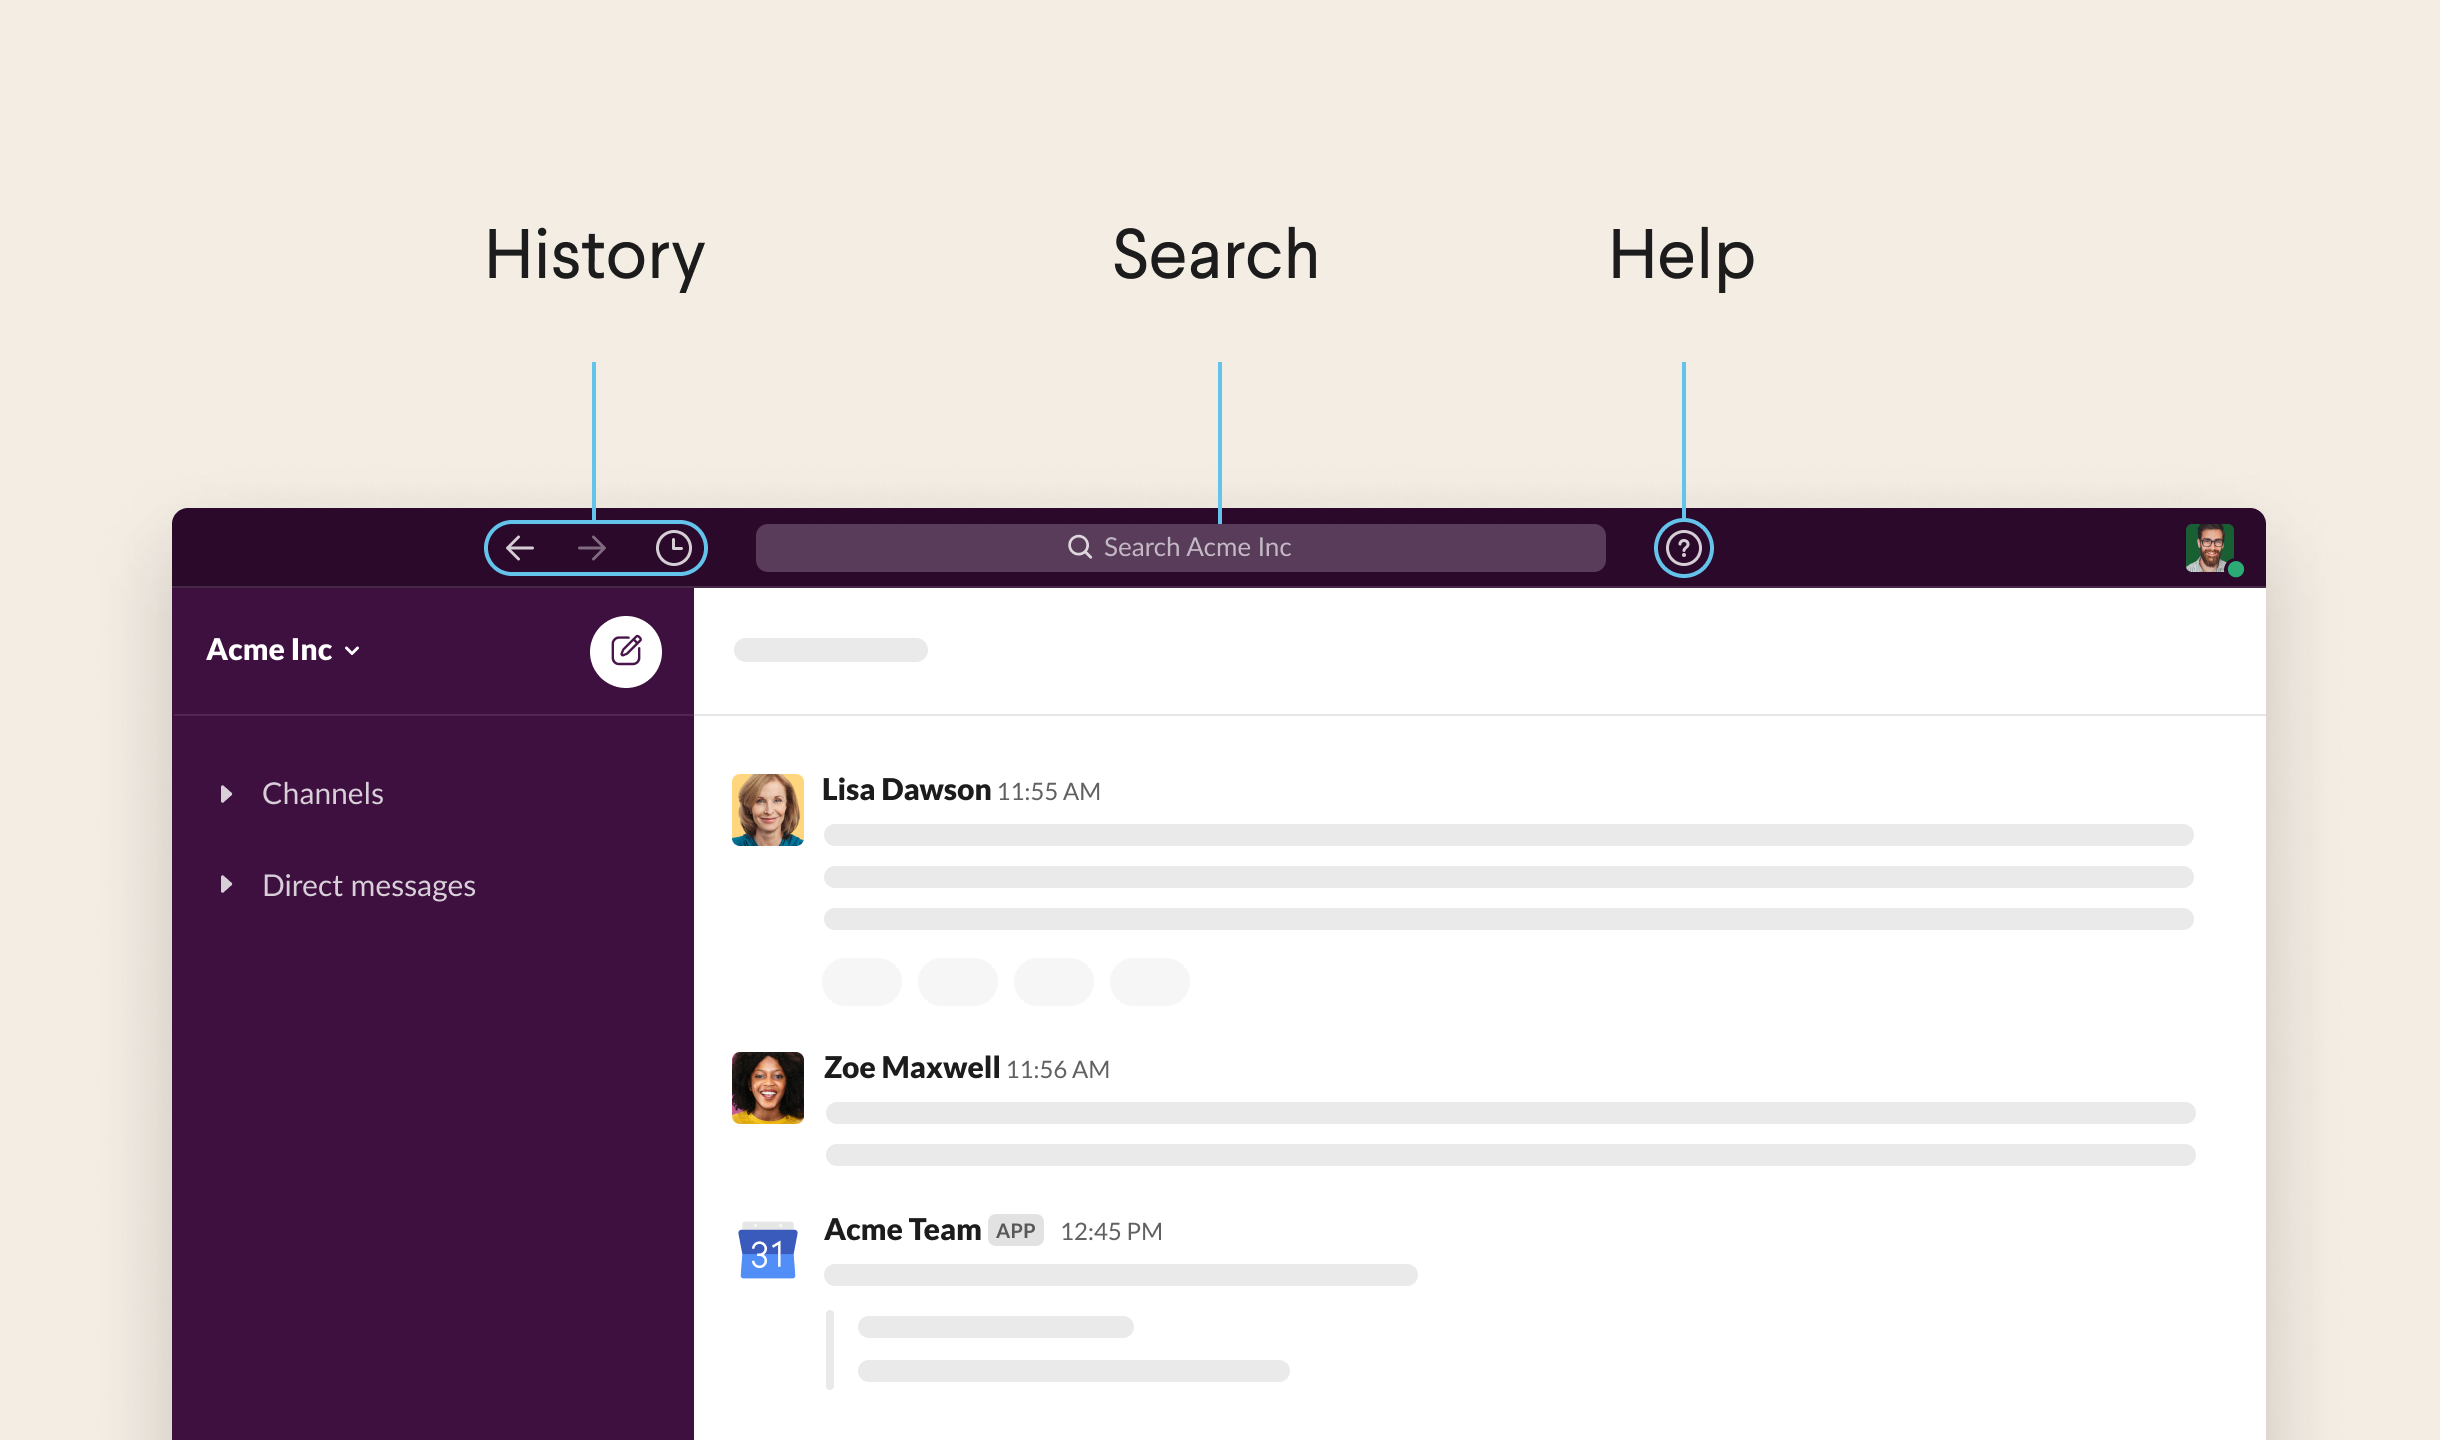 Top of Slack desktop app showing navigation icons and search bar